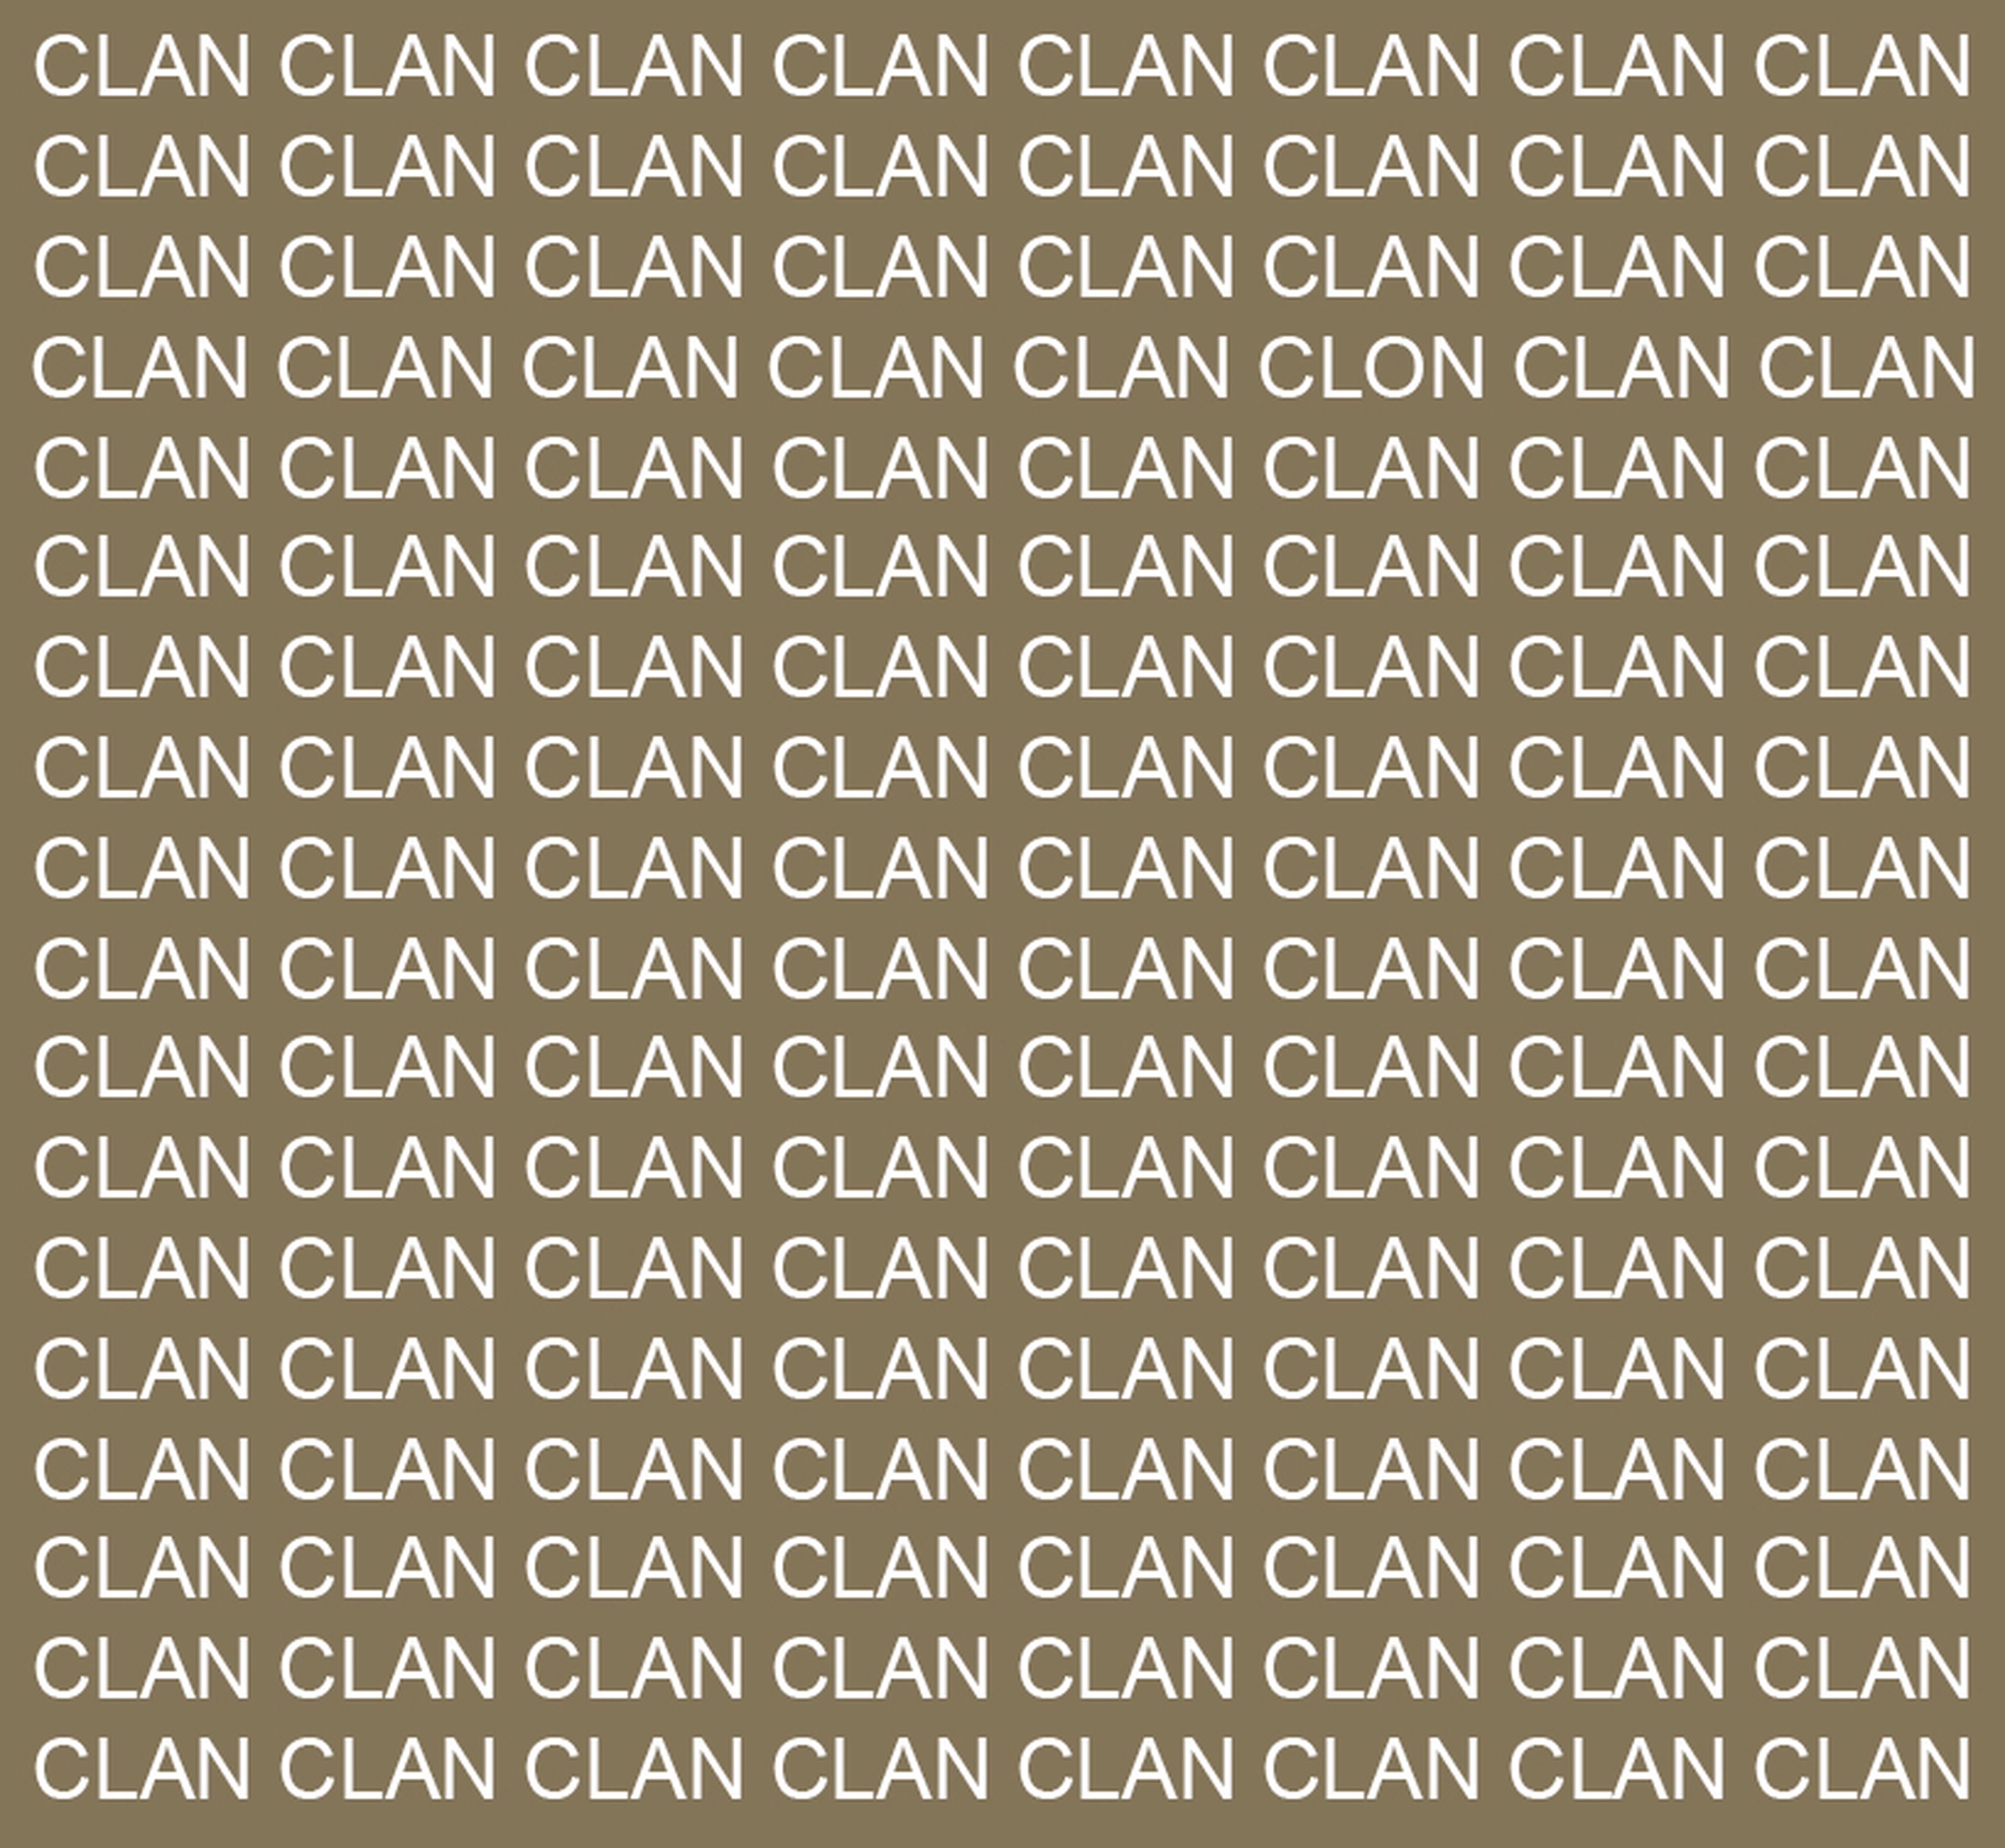 Reto visual encuentra la palabra clon